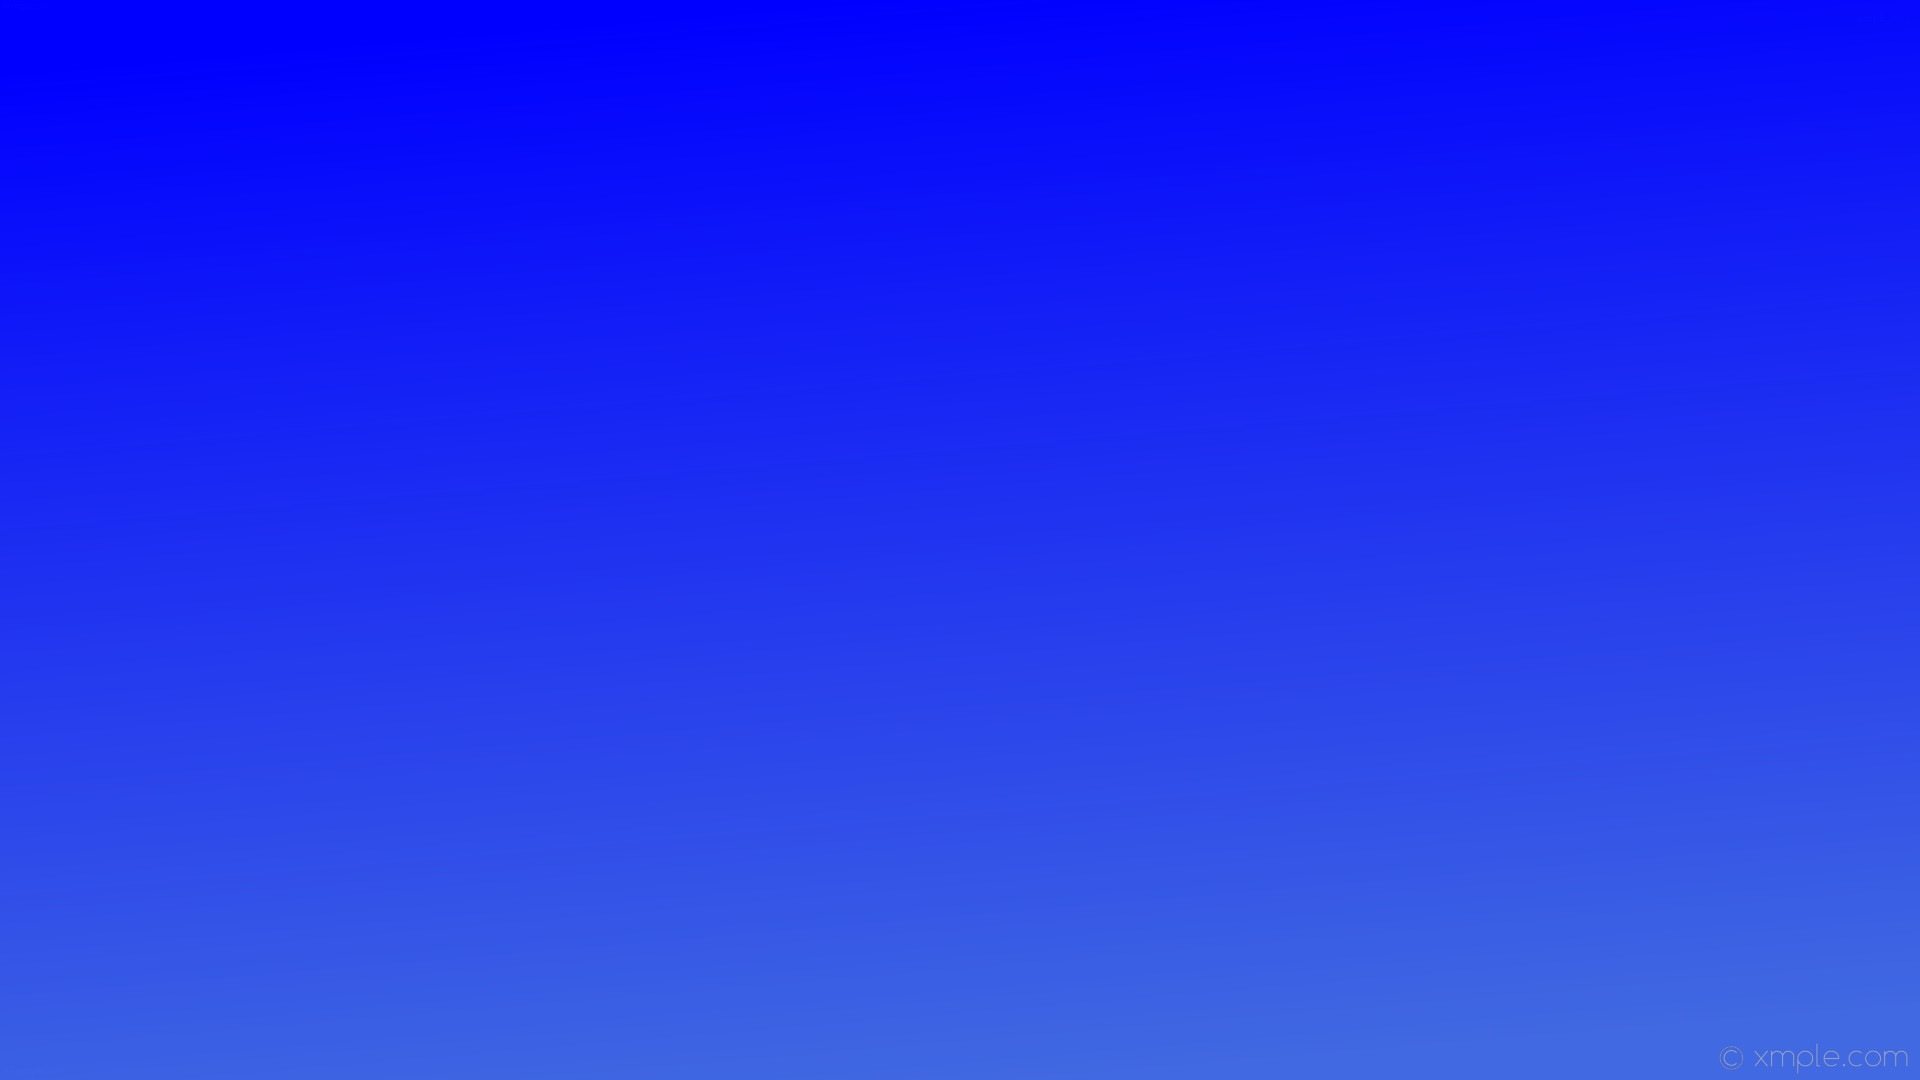 1920x1080 wallpaper linear gradient blue royal blue #0000ff #4169e1 105Â°